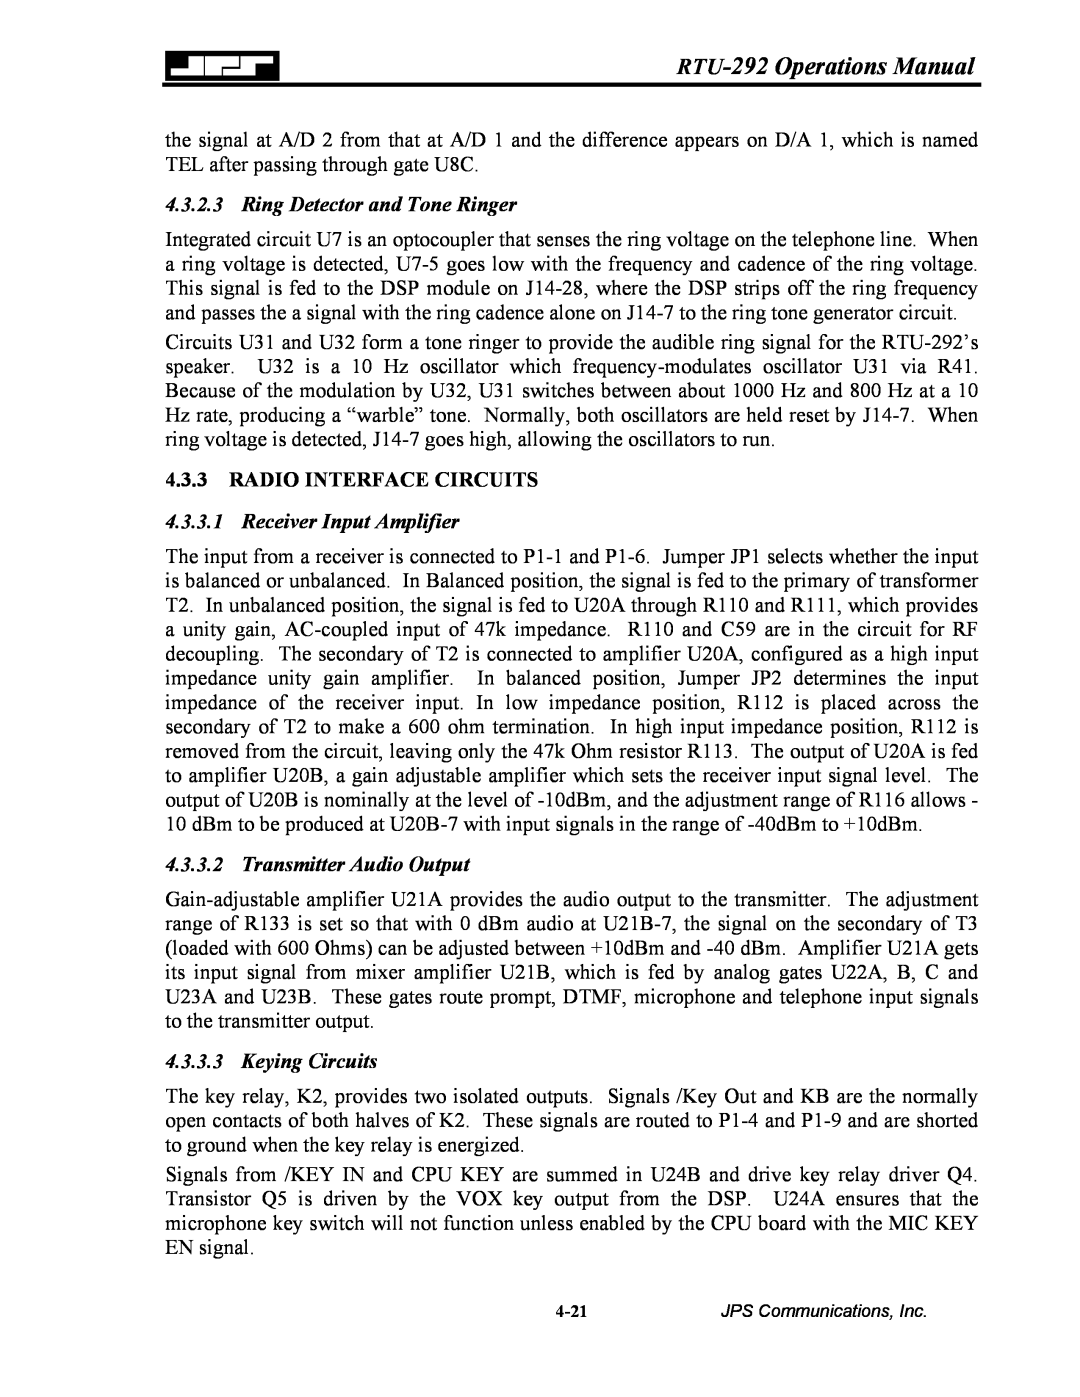 Nortel Networks RTU-292 Operations Manual, Ring Detector and Tone Ringer, Radio Interface Circuits, Keying Circuits 